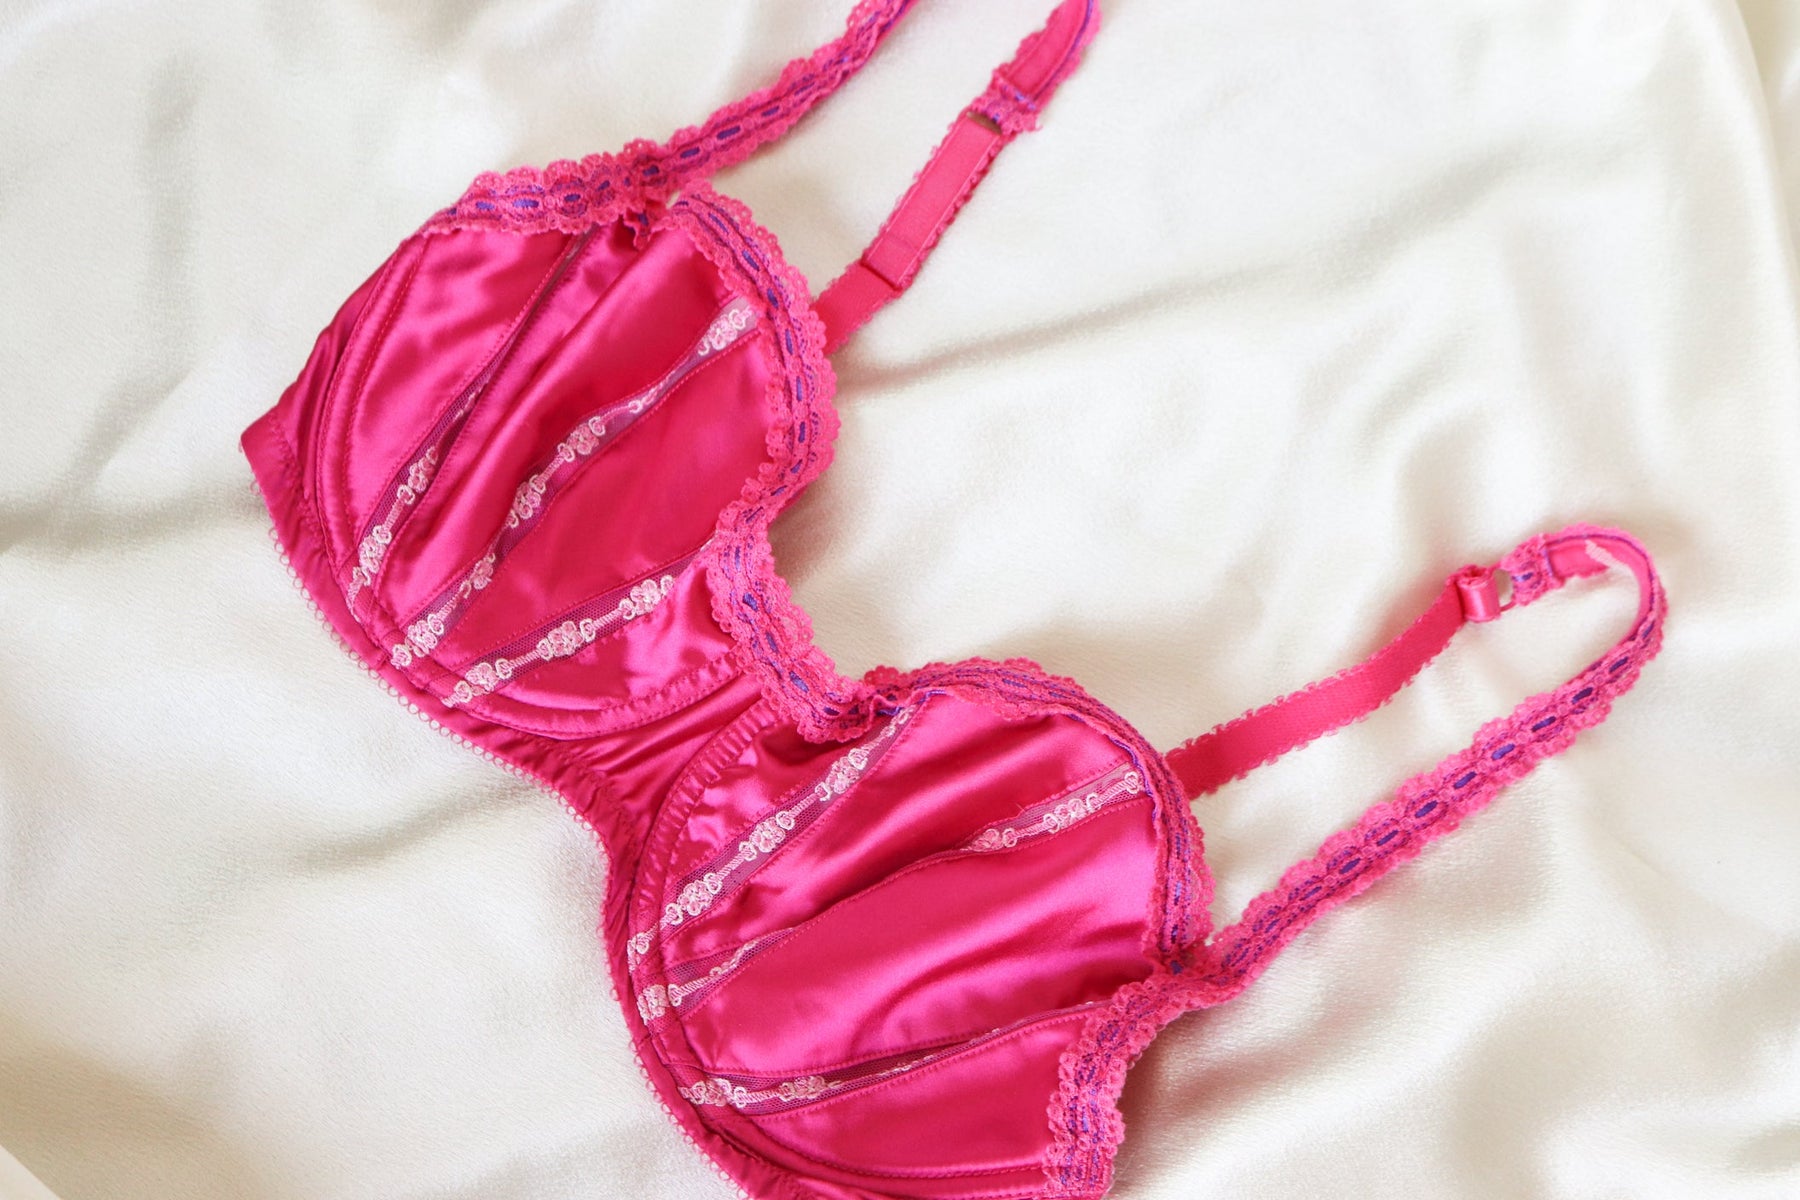 Victoria's Secret Bra Size 38C Pink Bra